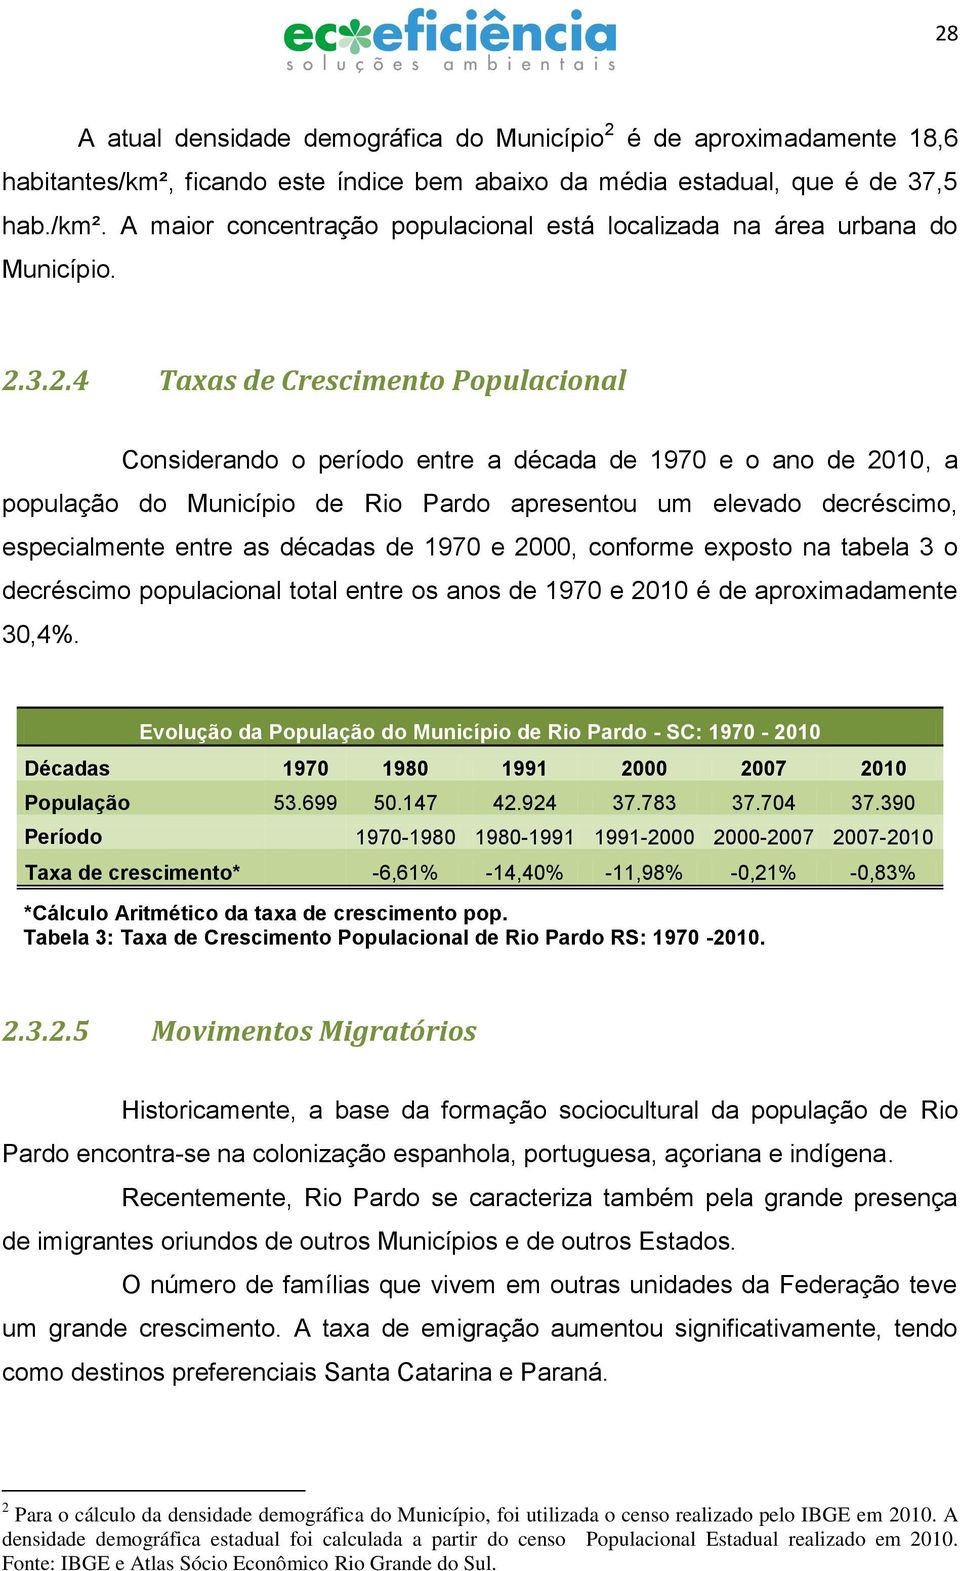 décadas de 1970 e 2000, conforme exposto na tabela 3 o decréscimo populacional total entre os anos de 1970 e 2010 é de aproximadamente 30,4%.